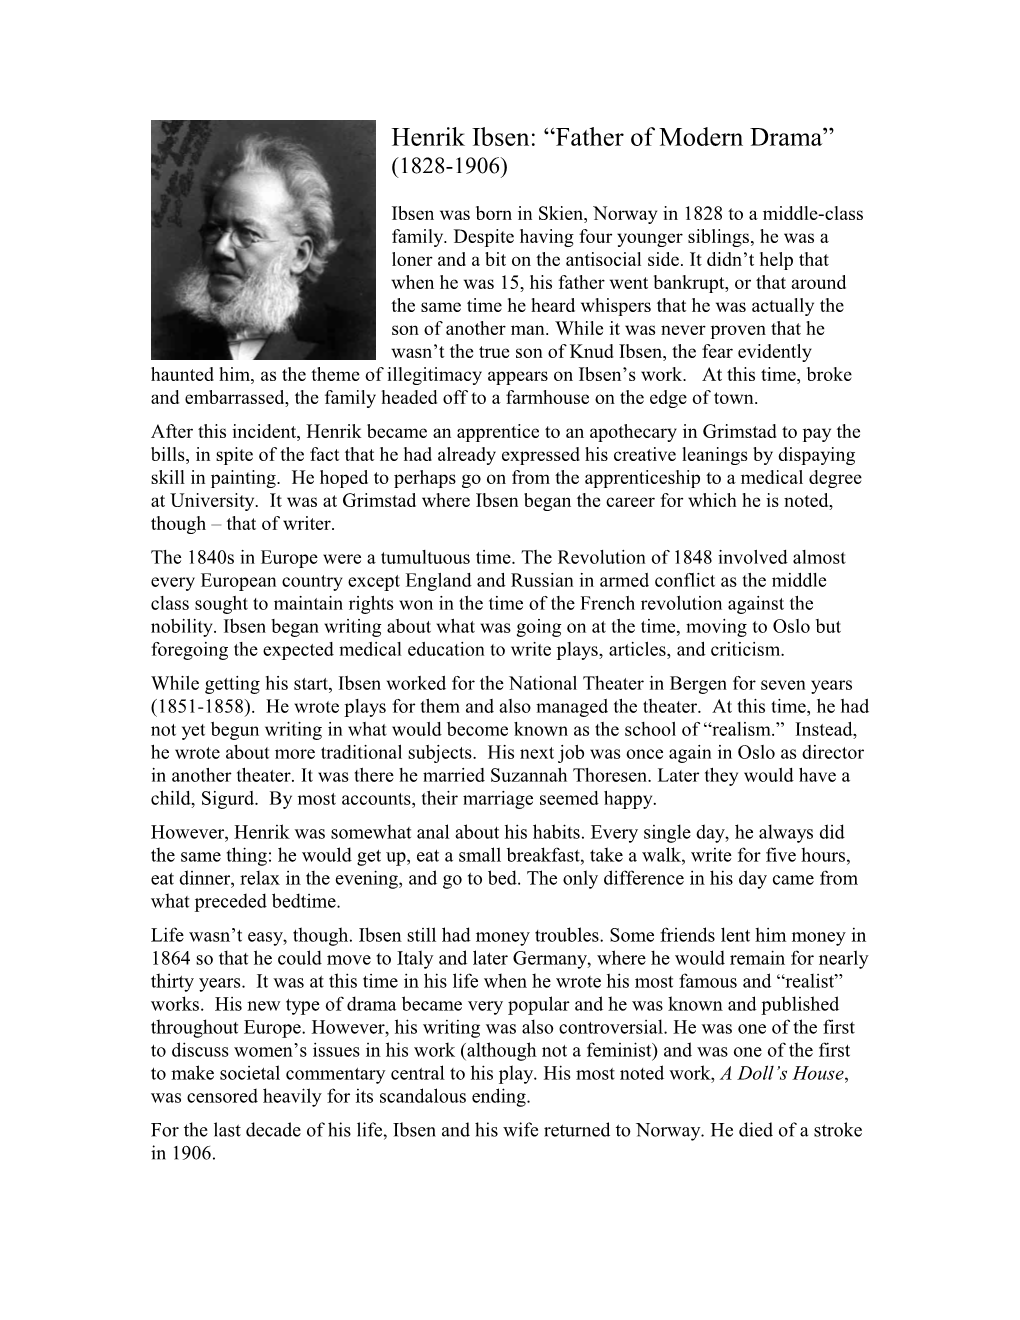 Henrik Ibsen Father of Modern Drama